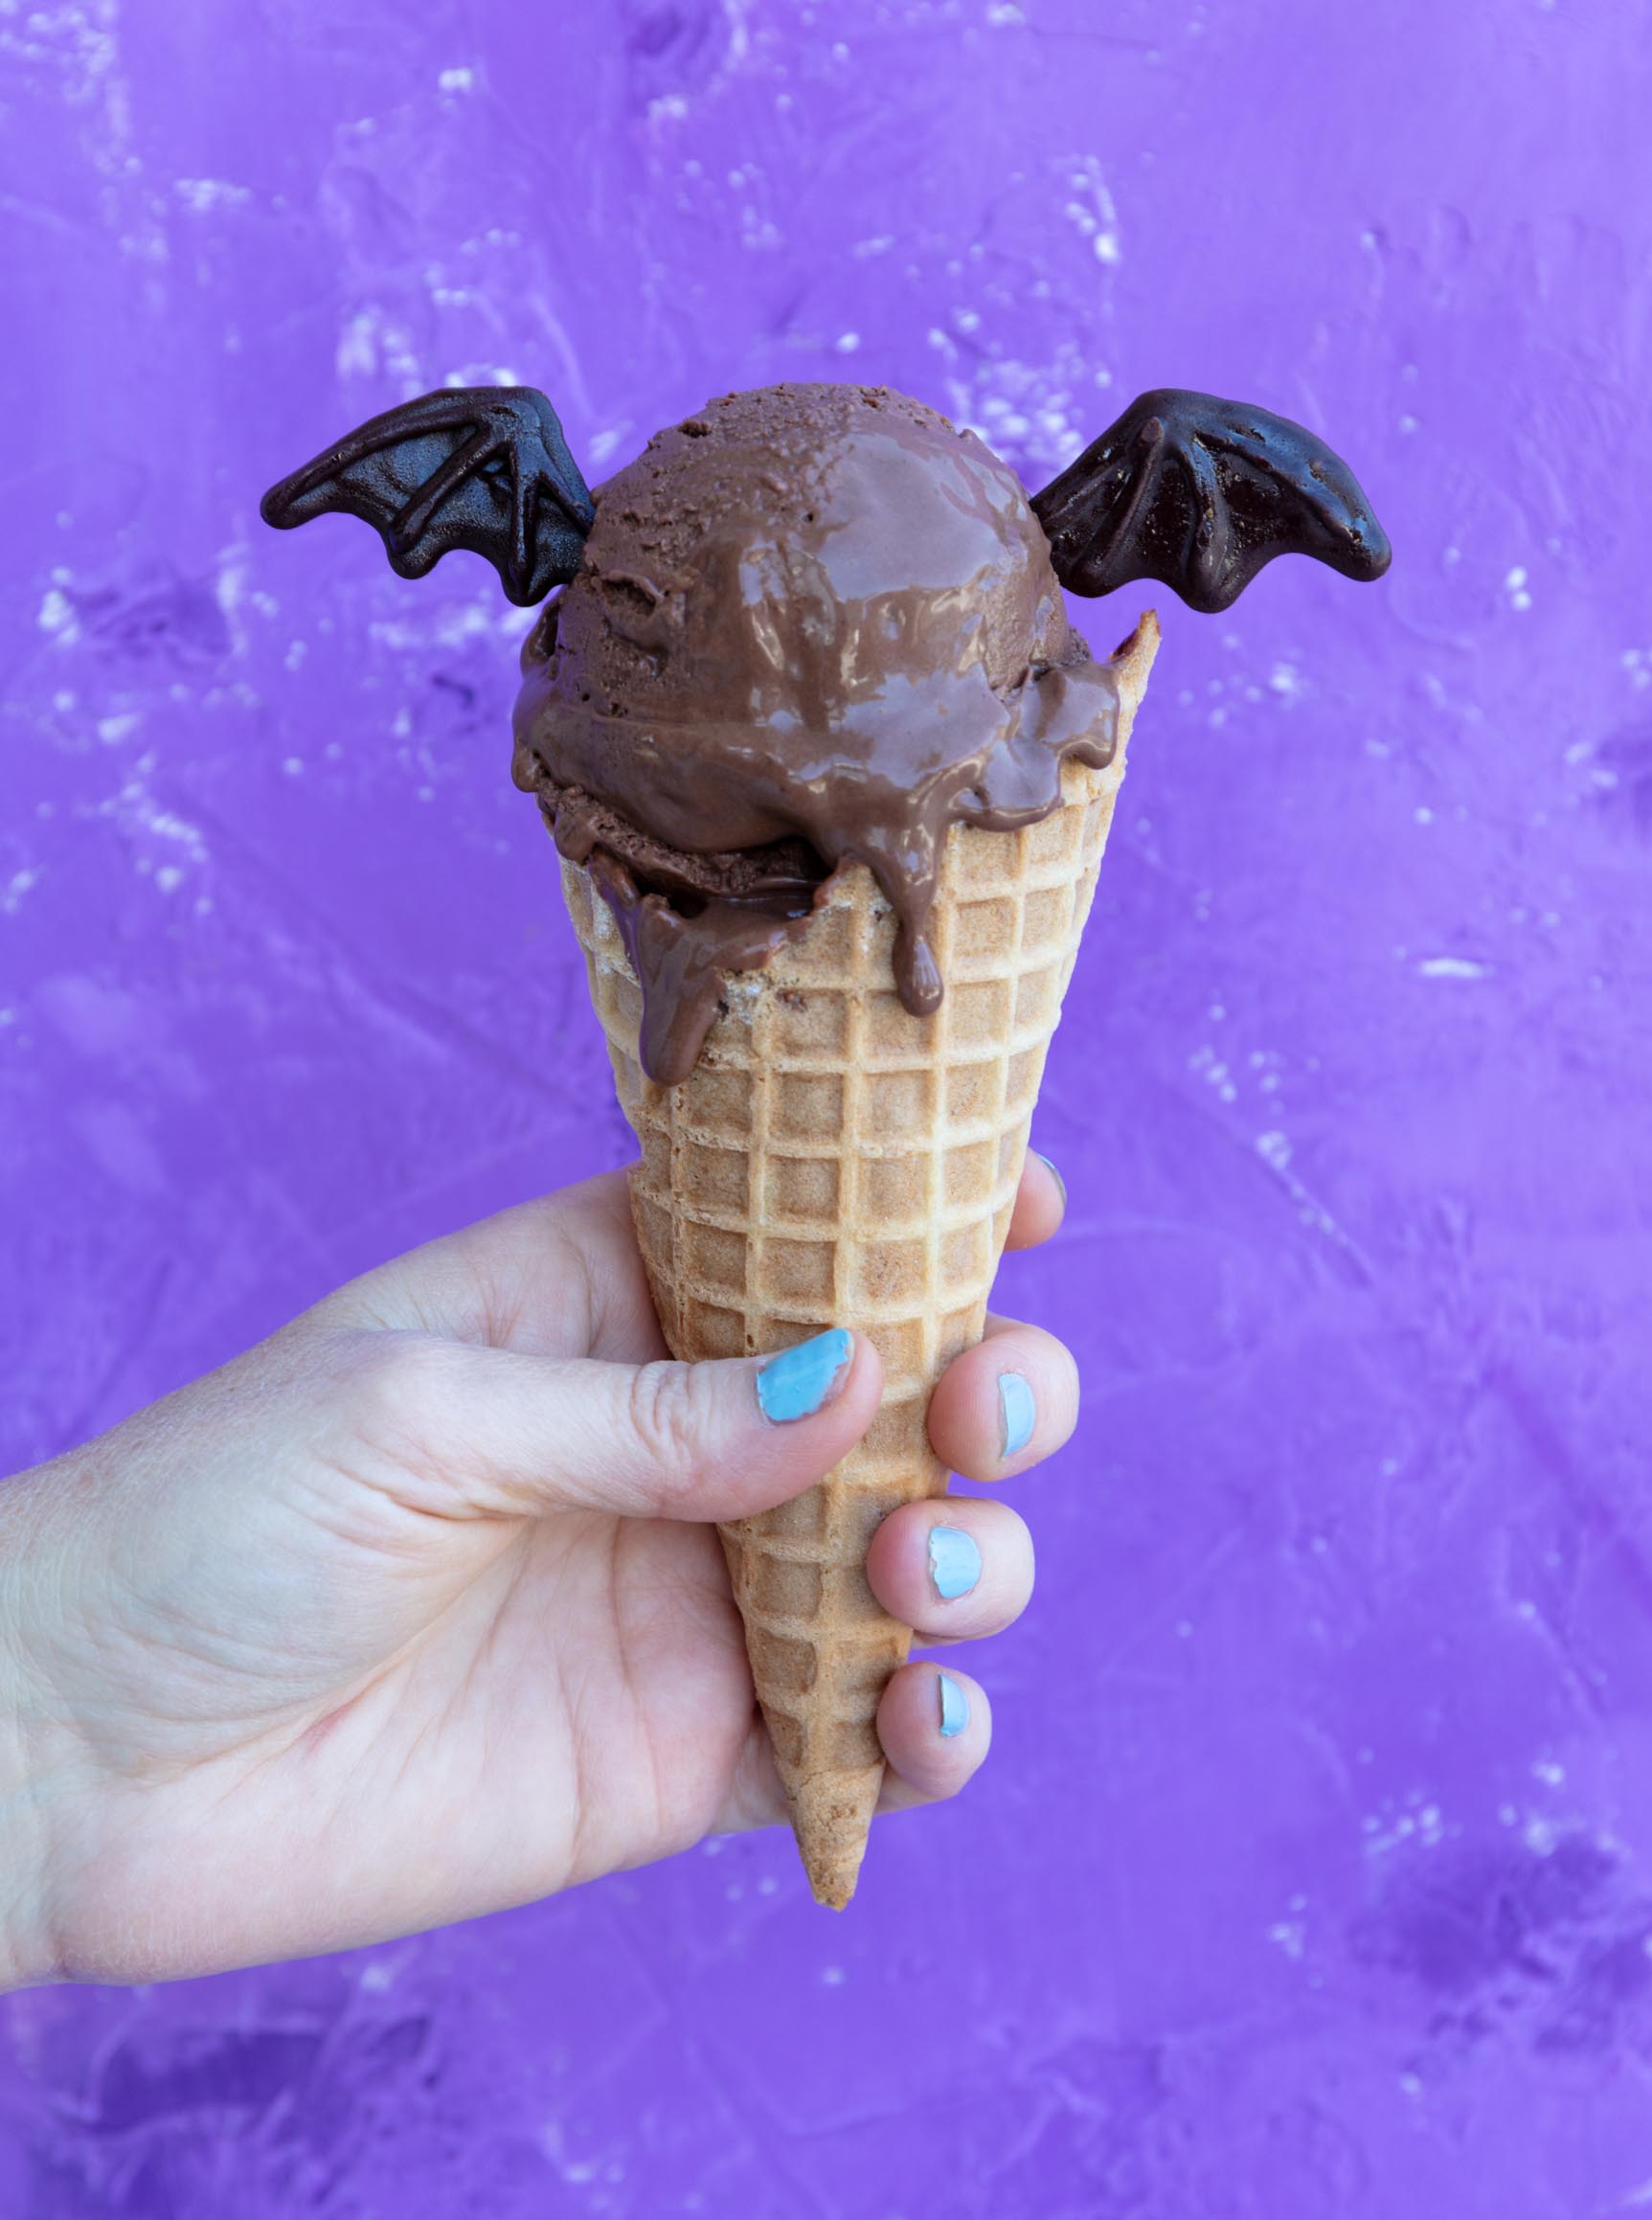 vegan chocolate brownie ice cream cone with bat wings